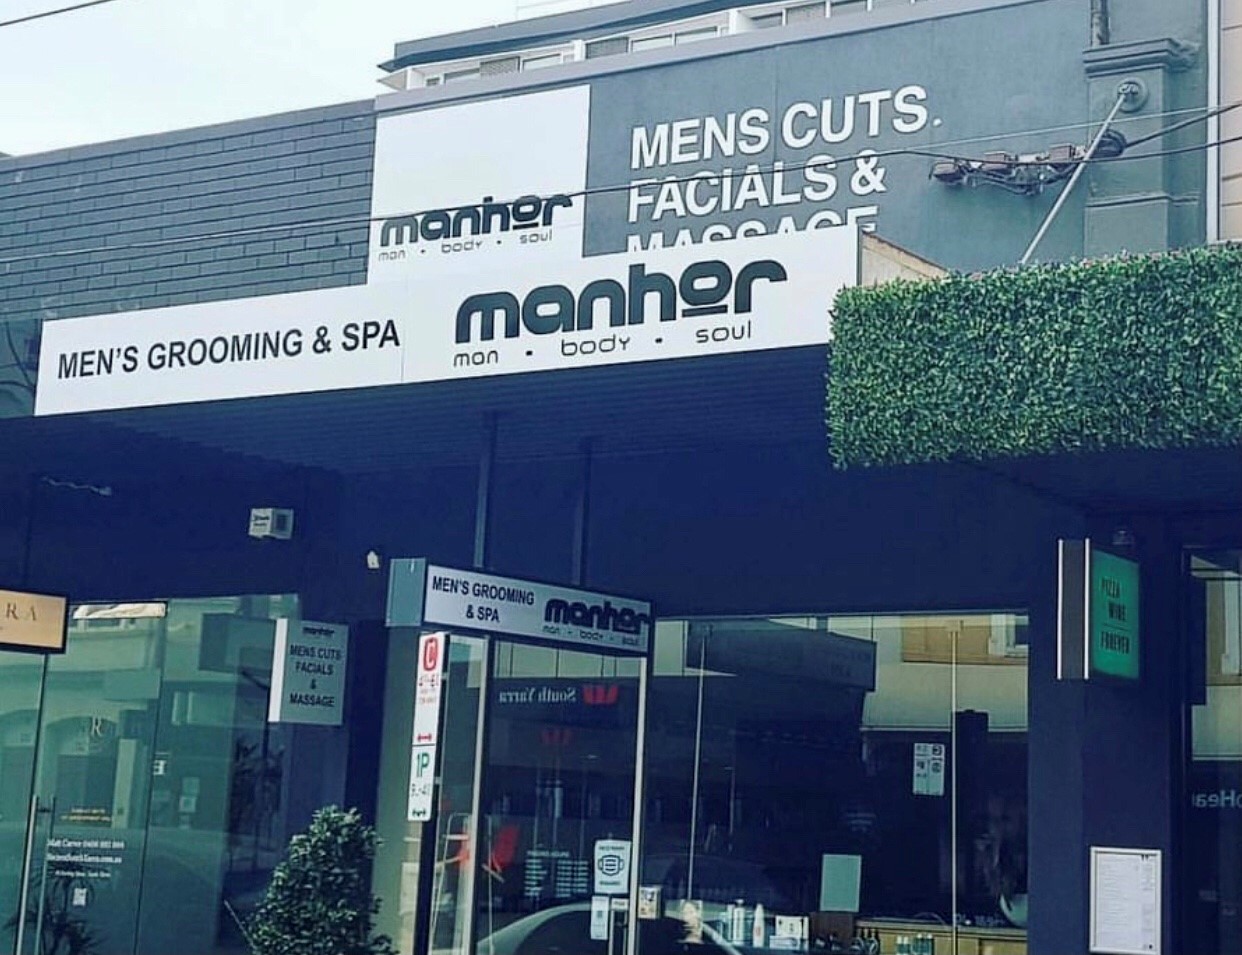 Manhor - Men's Salon & Barbershop